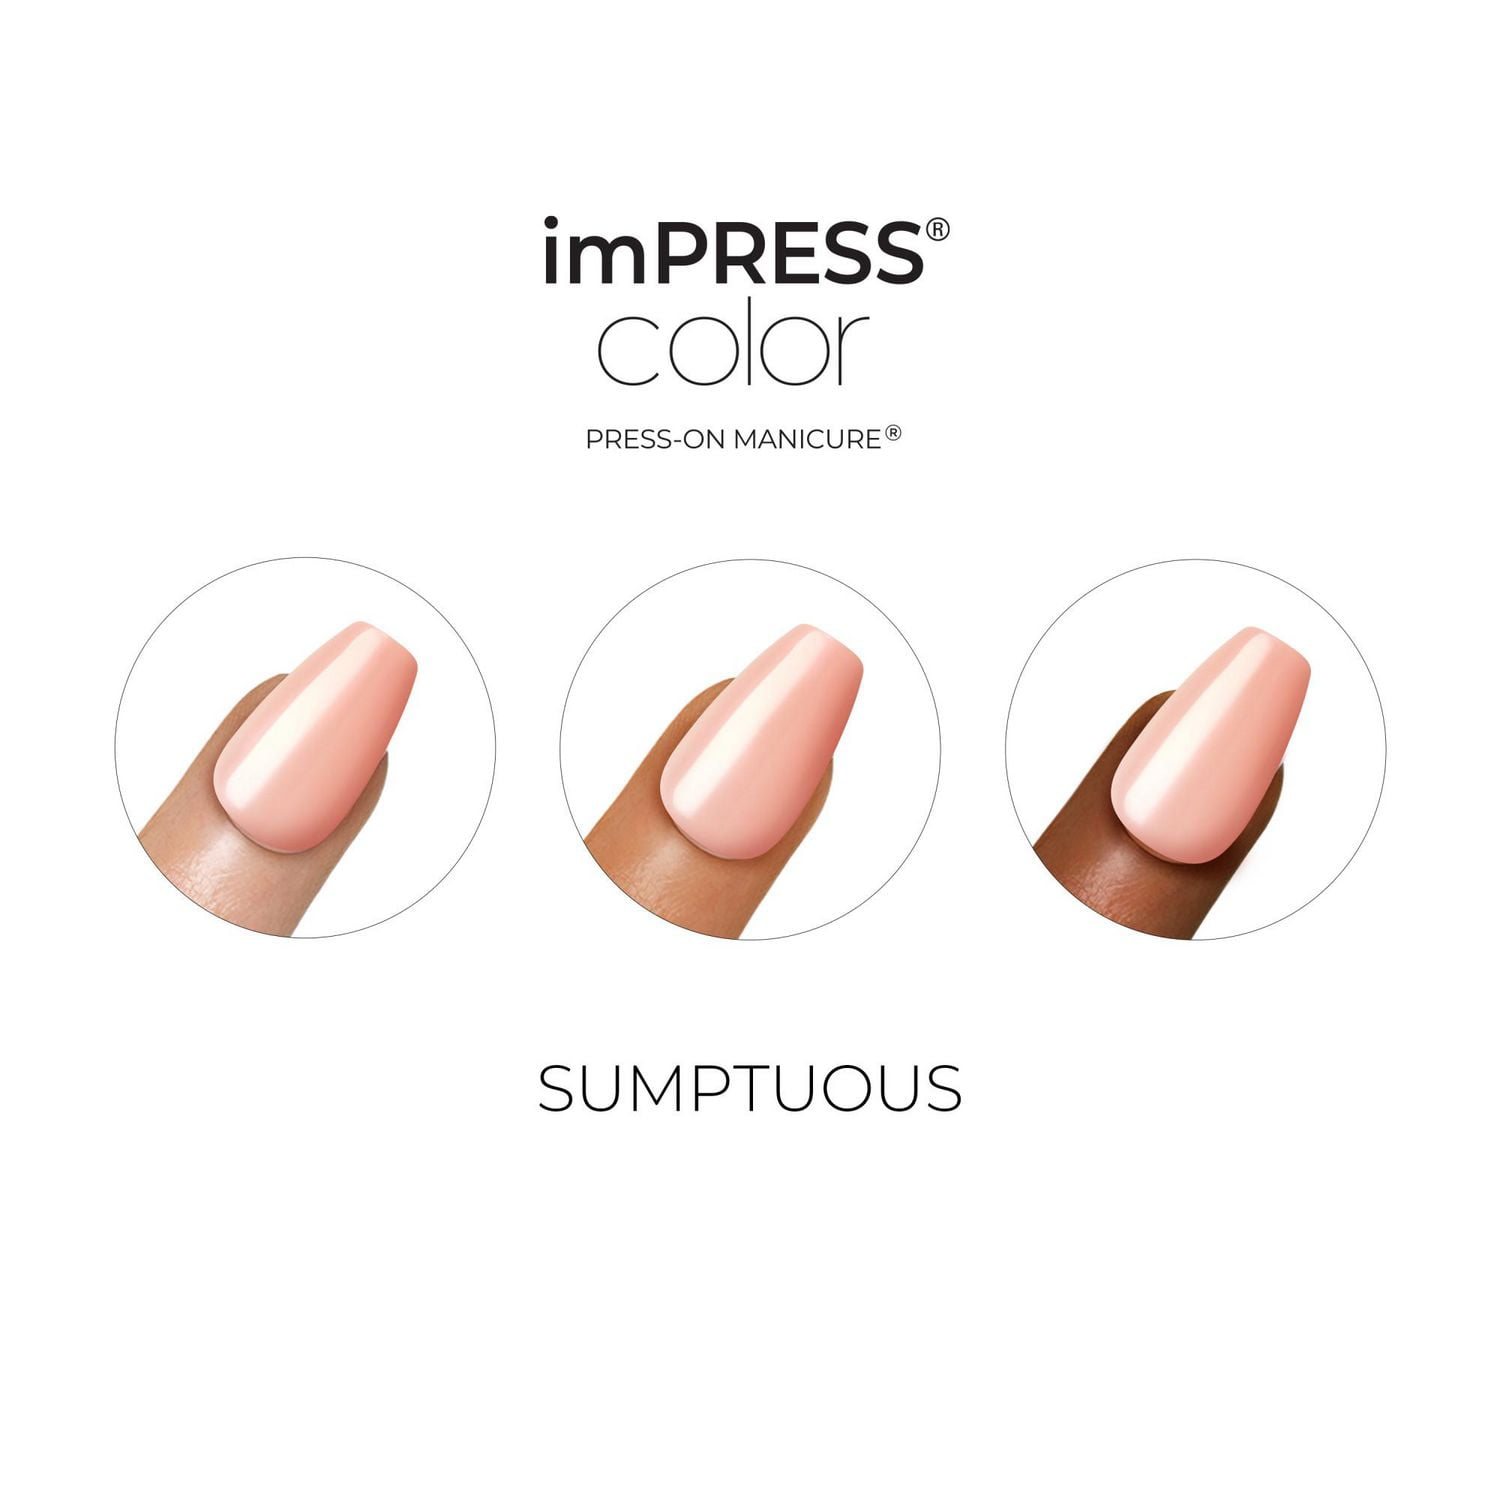 imPRESS Premium Glow Effect Press-On Nails, No Glue Needed, Neon